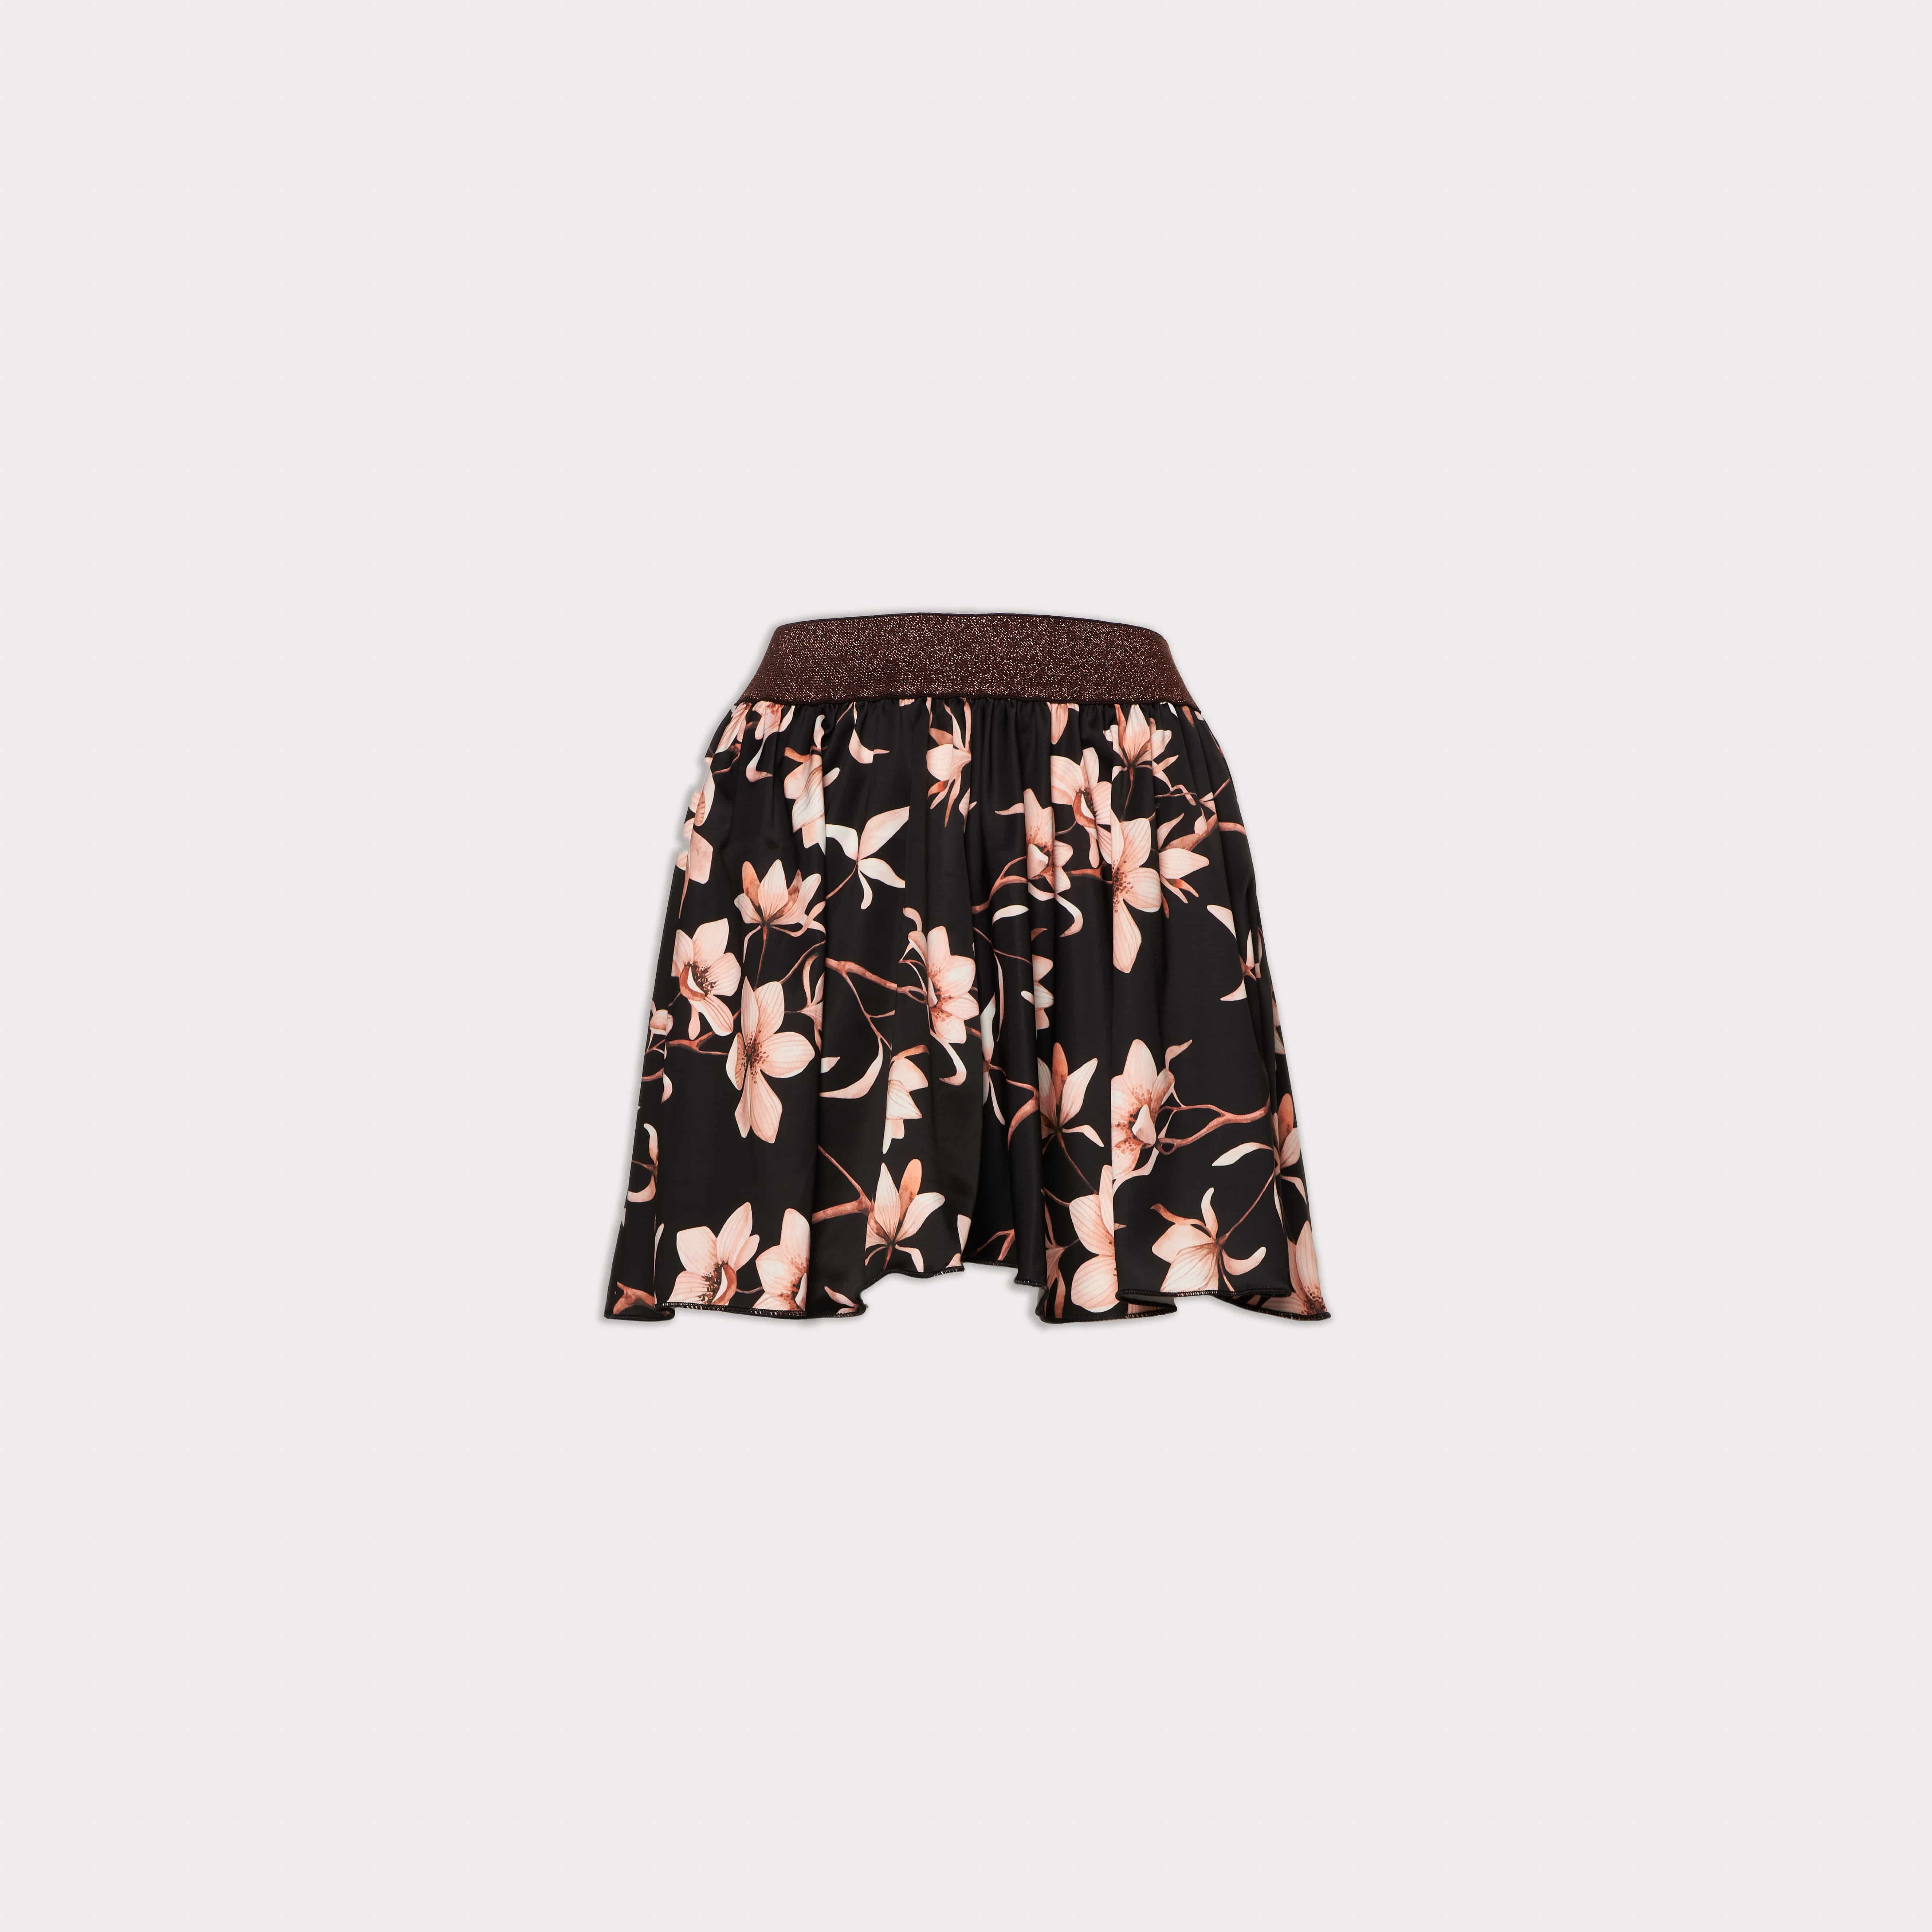 Magnolia-Shorts-6355